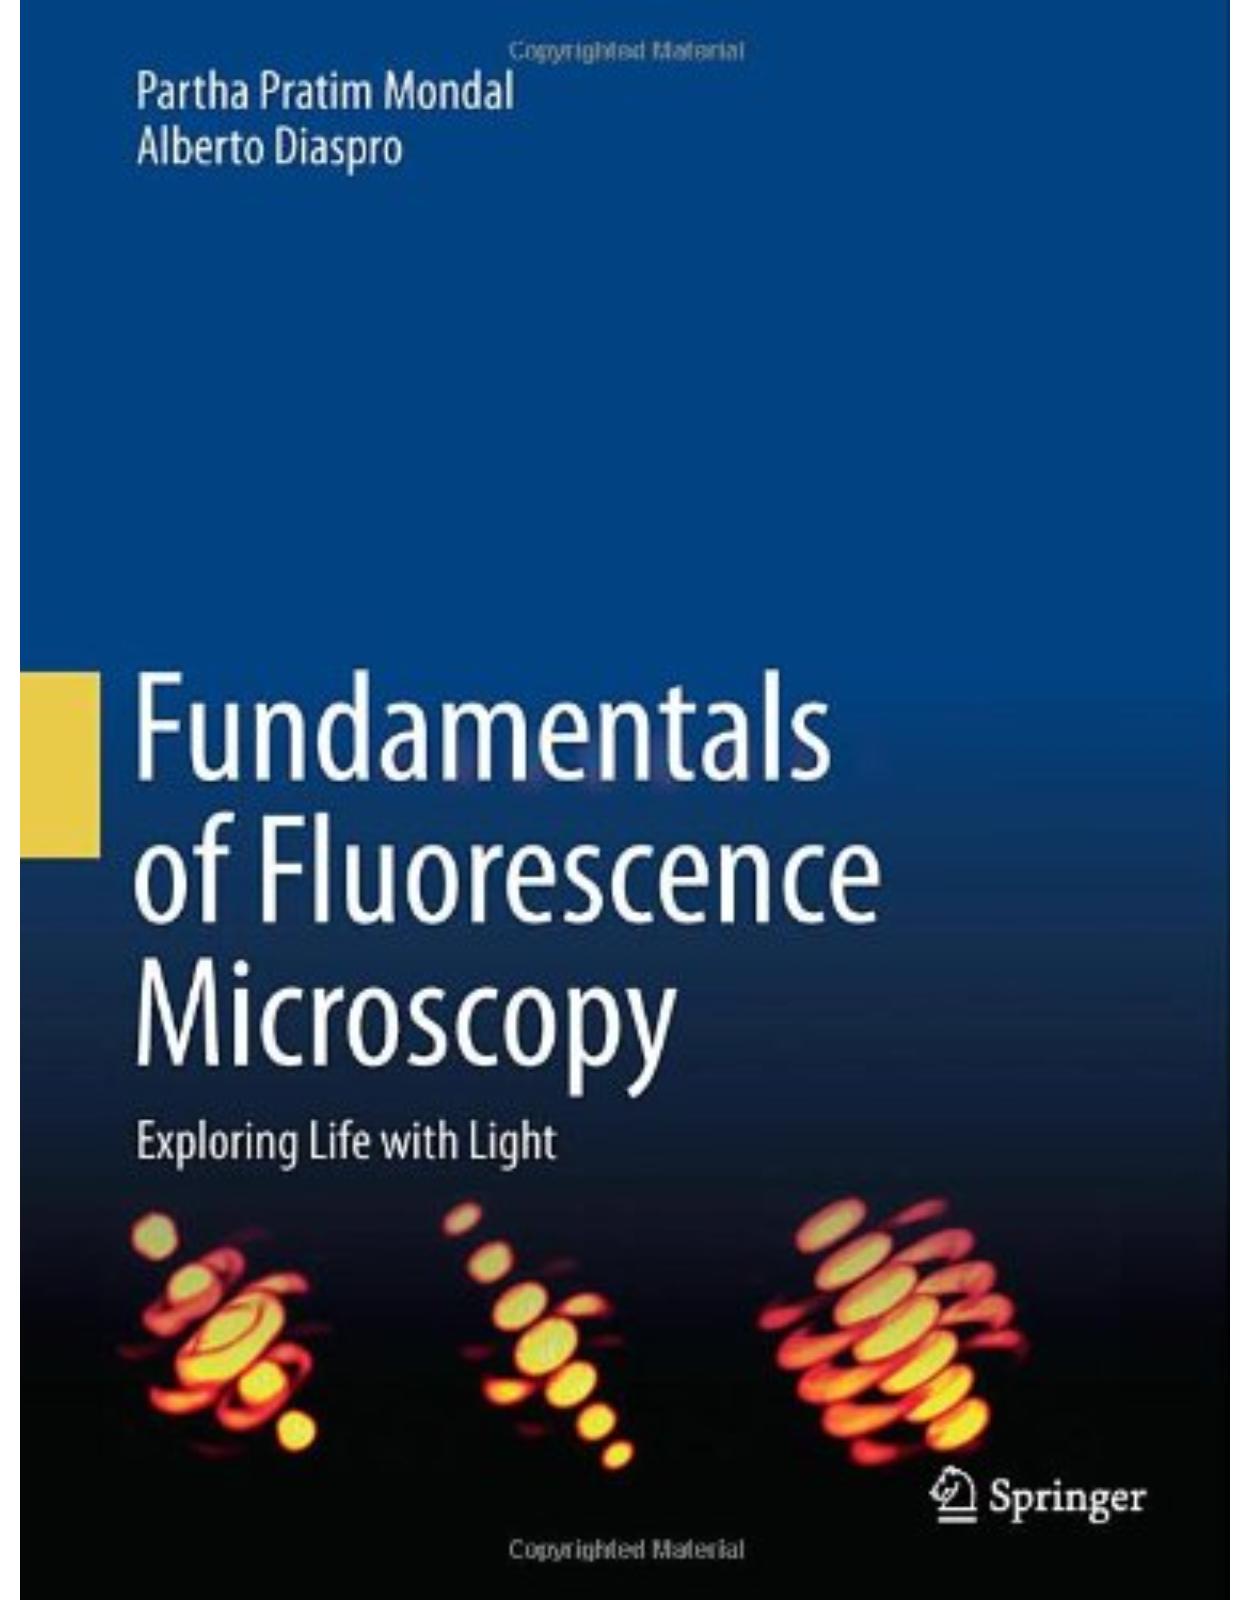 Fundamentals of Fluorescence Microscopy